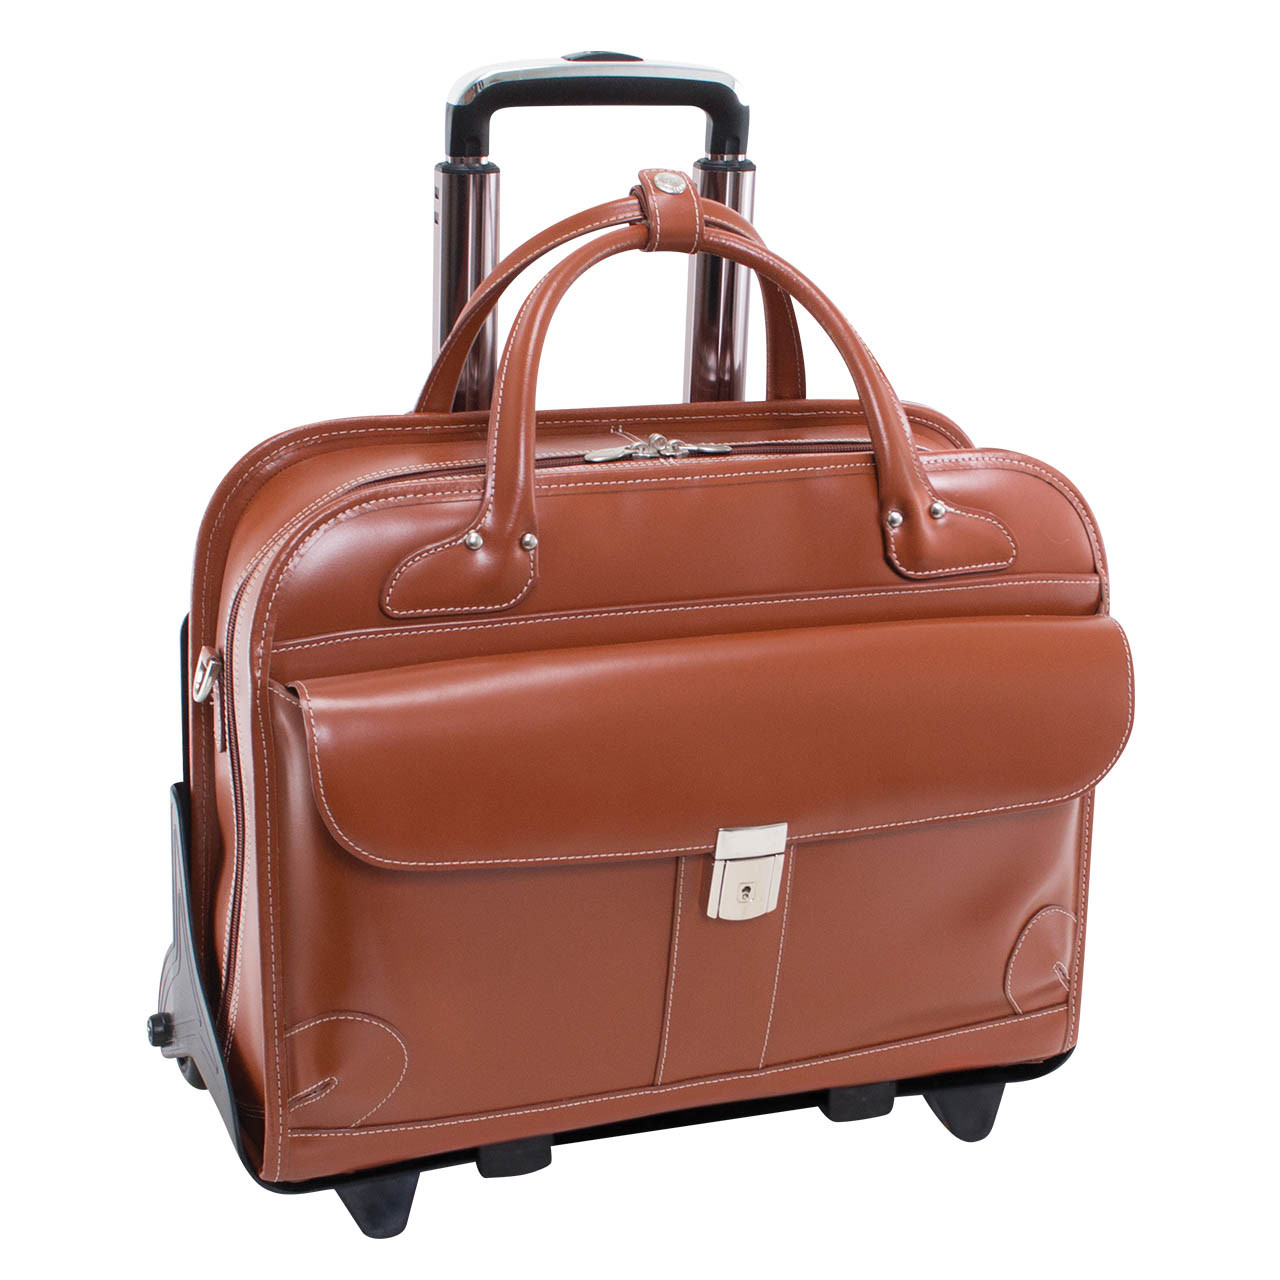 FRANKLIN COVEY Brown Leather Tote Bag Briefcase Organizer Shoulder